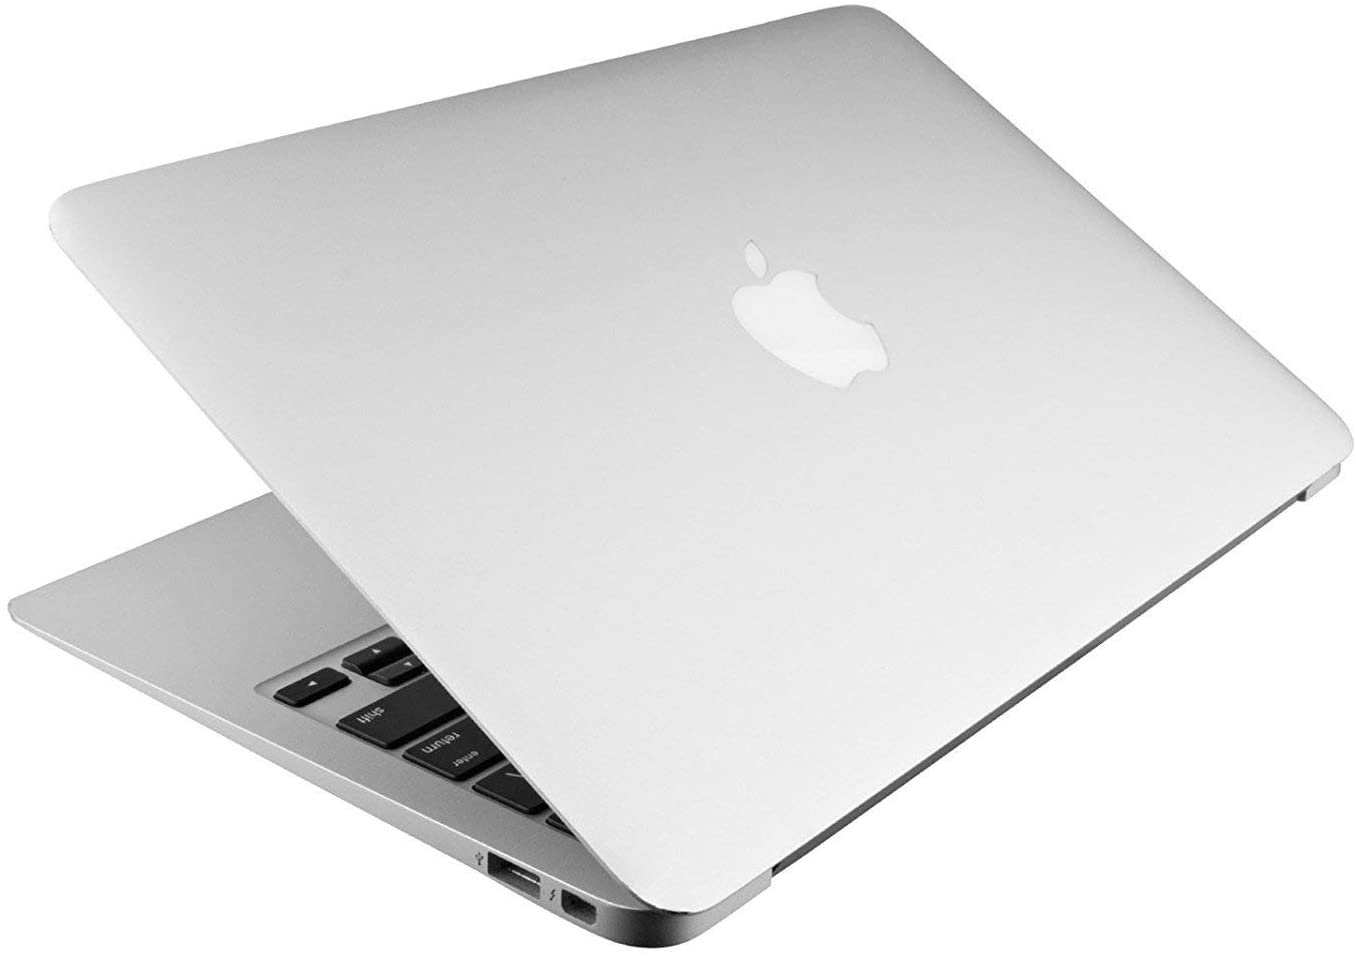 Apple MacBook Air 2.2 GHz Intel Core i7 5650 (Z0UU1LL/A), 8GB RAM, 256 GB SSD, Mac OS, Silver Reacondicionada de Fabrica AA (2017)